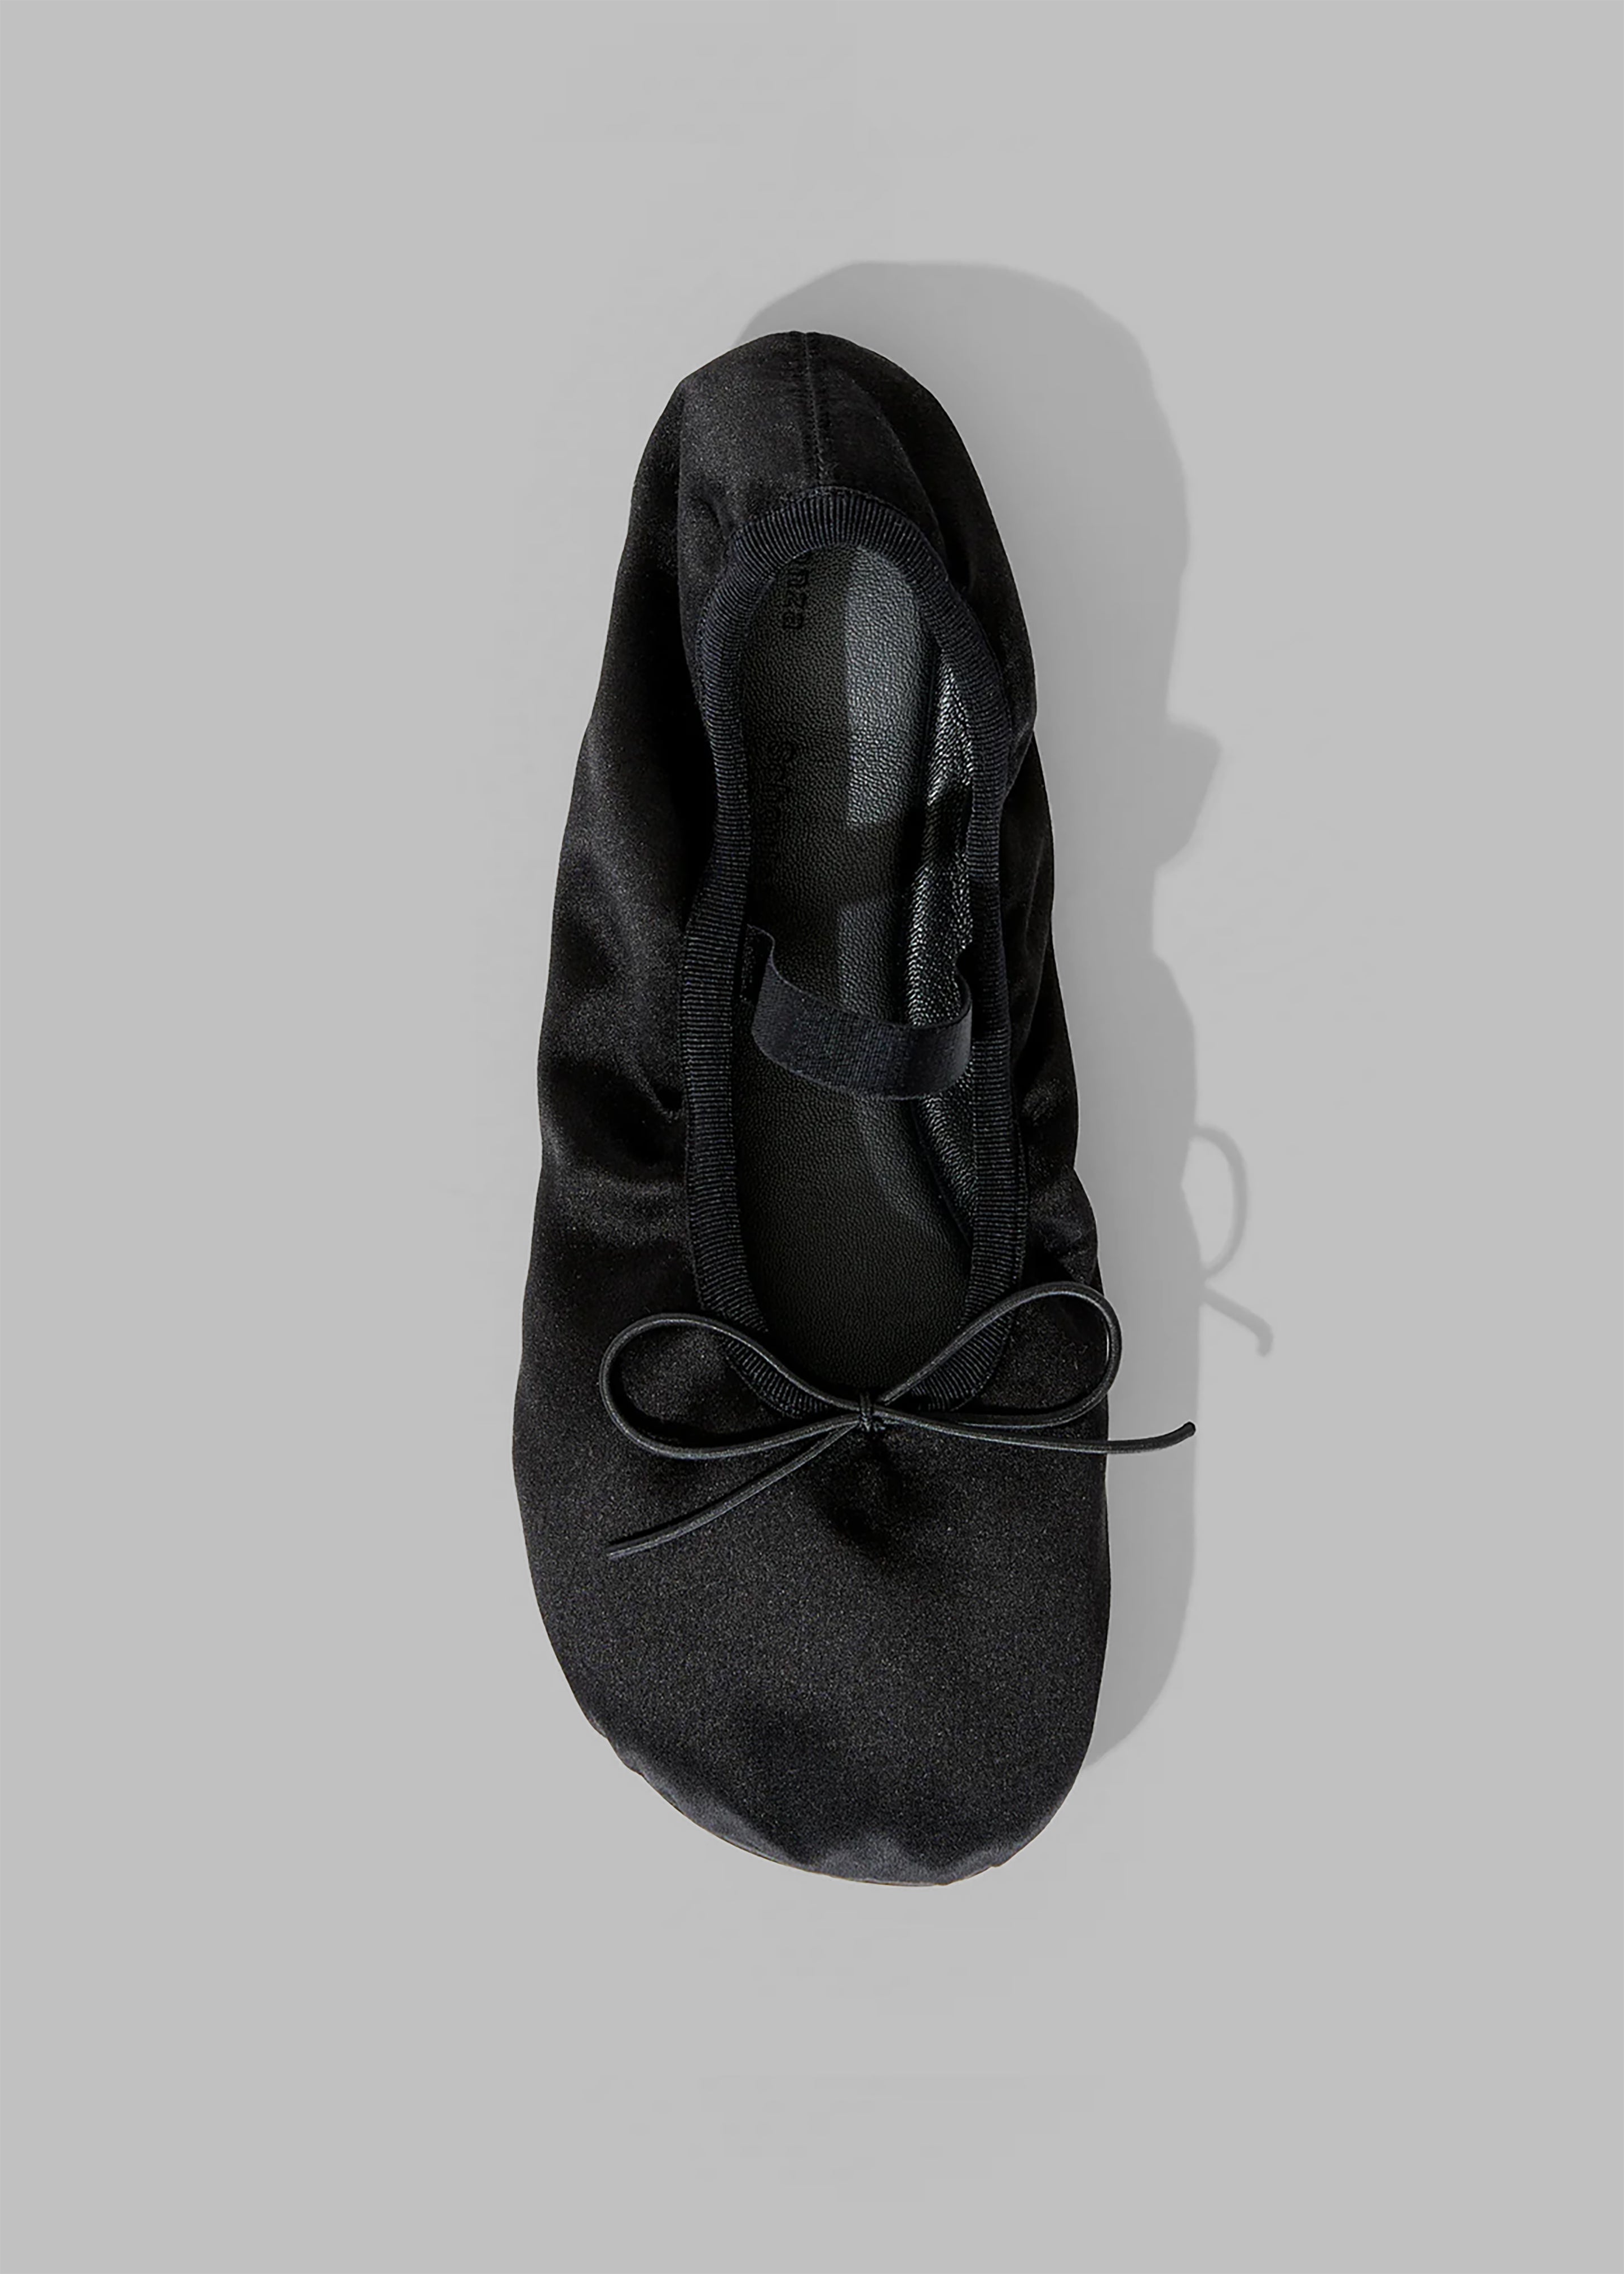 Proenza Schouler Glove Ballet Flats - Black - 1